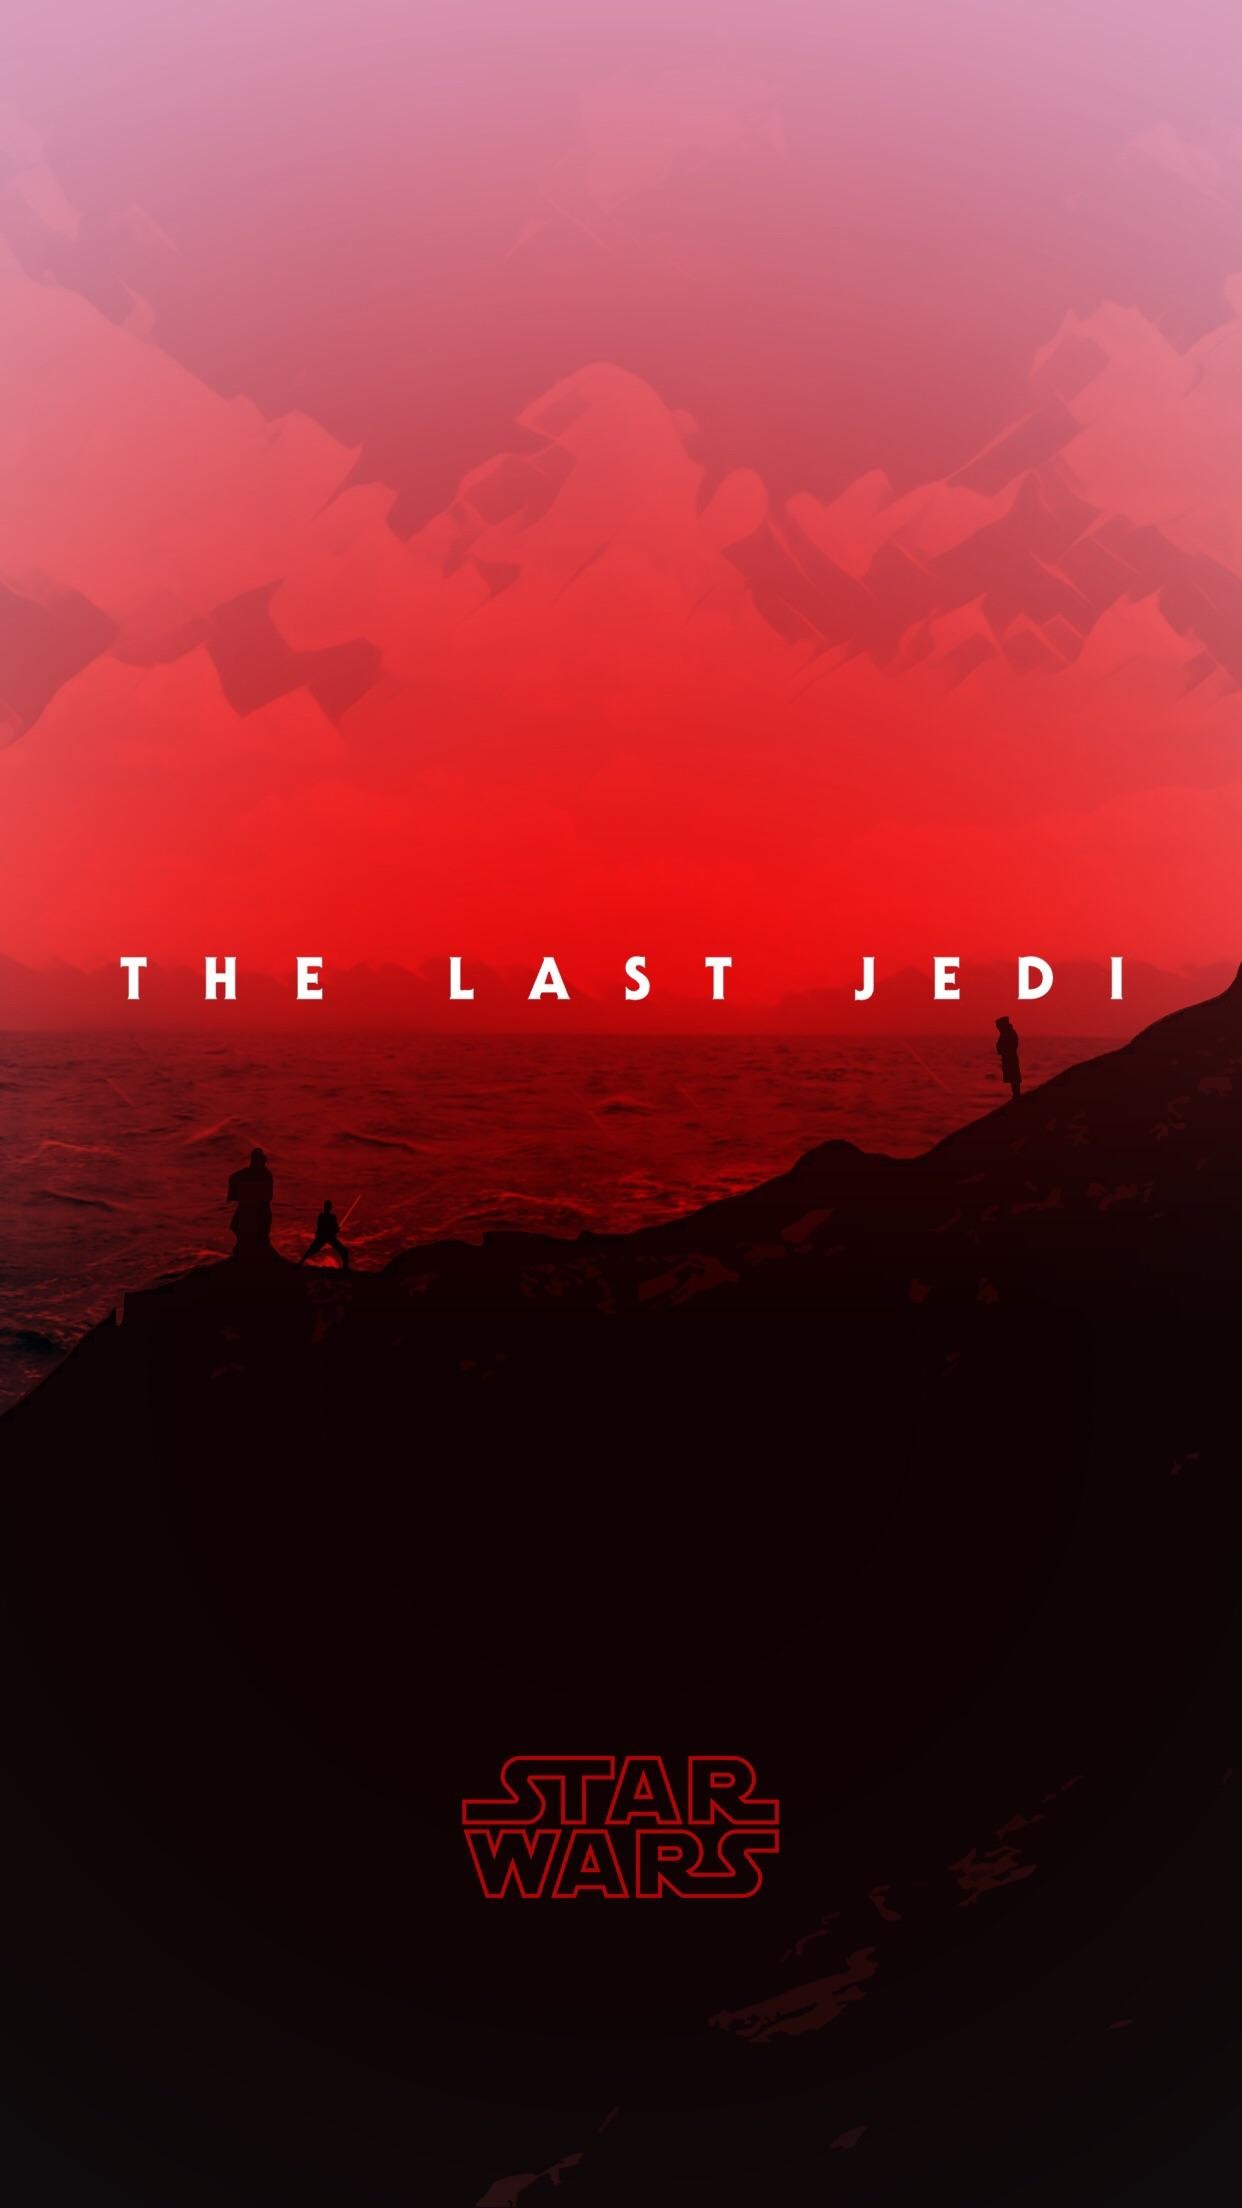 Star Wars The Last Jedi 2017 HD Wallpaper From Gallsource.com